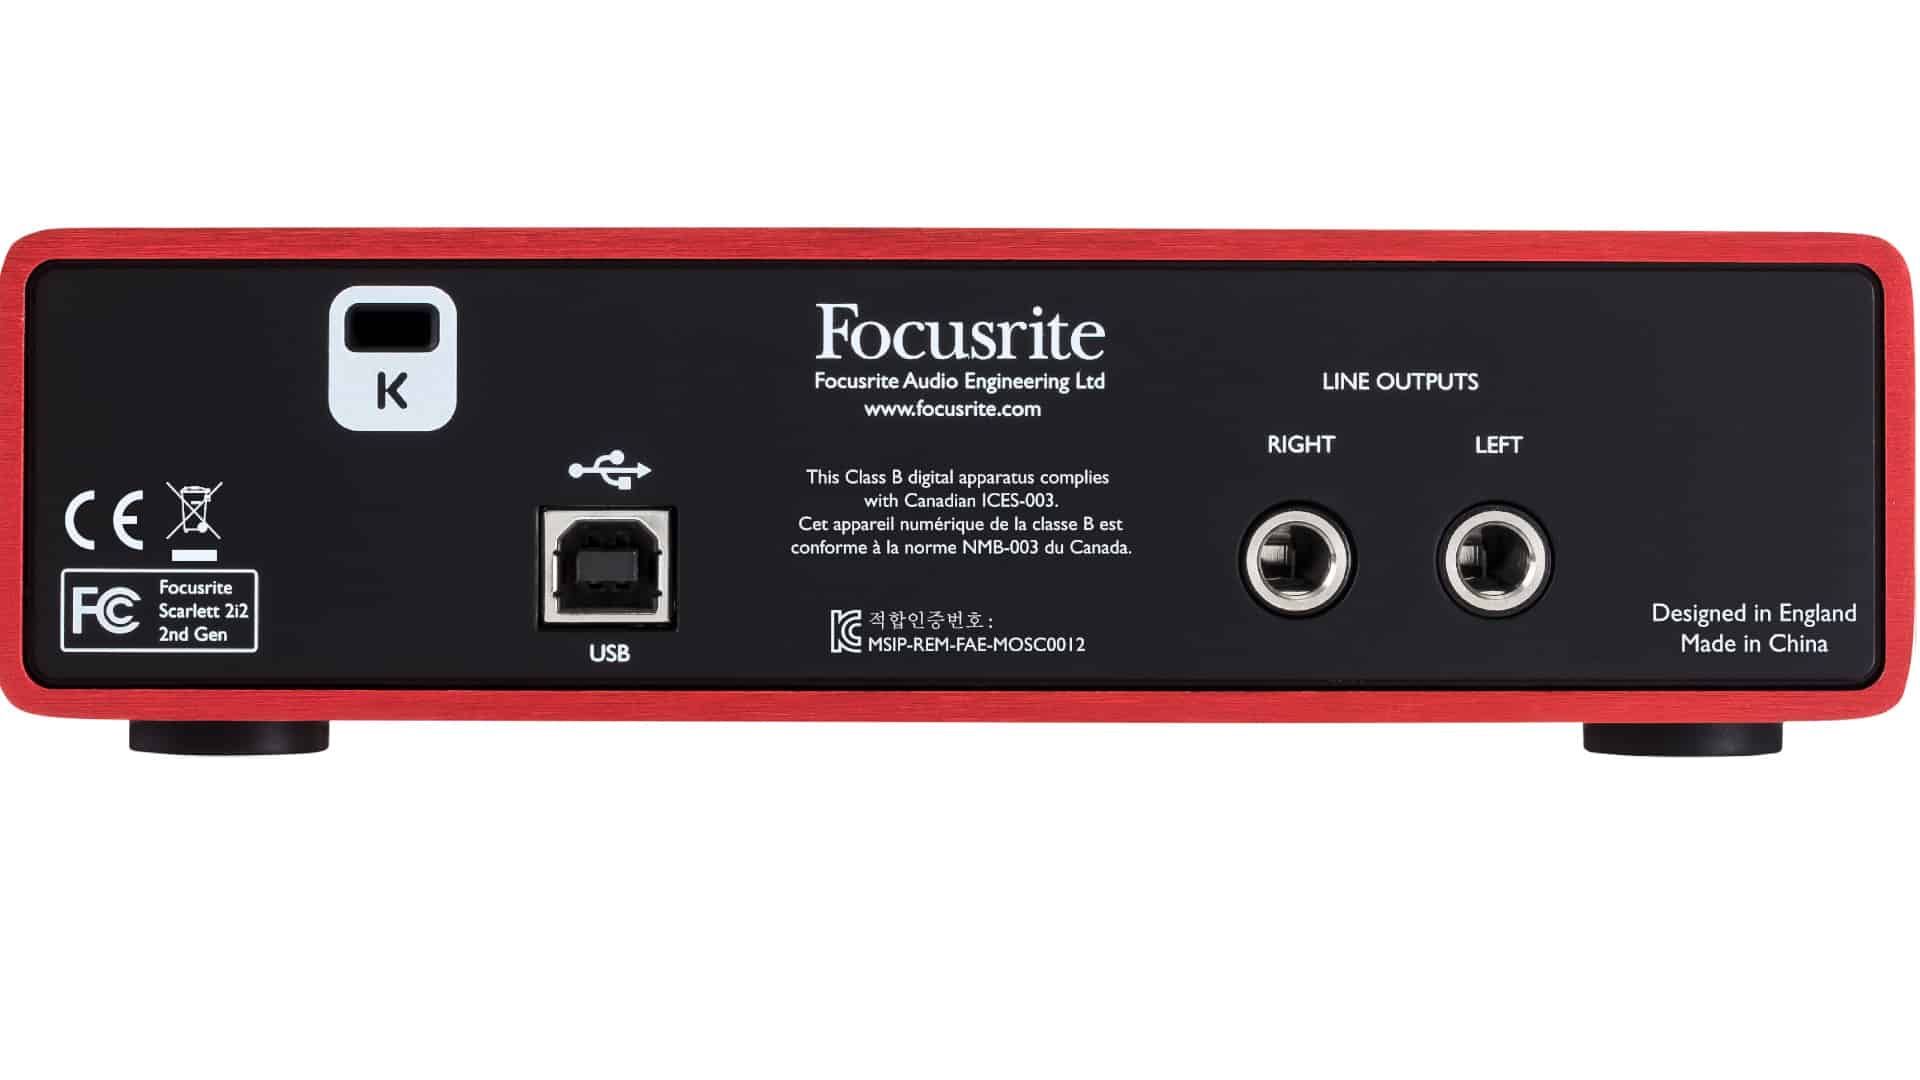 Focusrite Scarlett 2i2 2nd Gen USB Interface Review